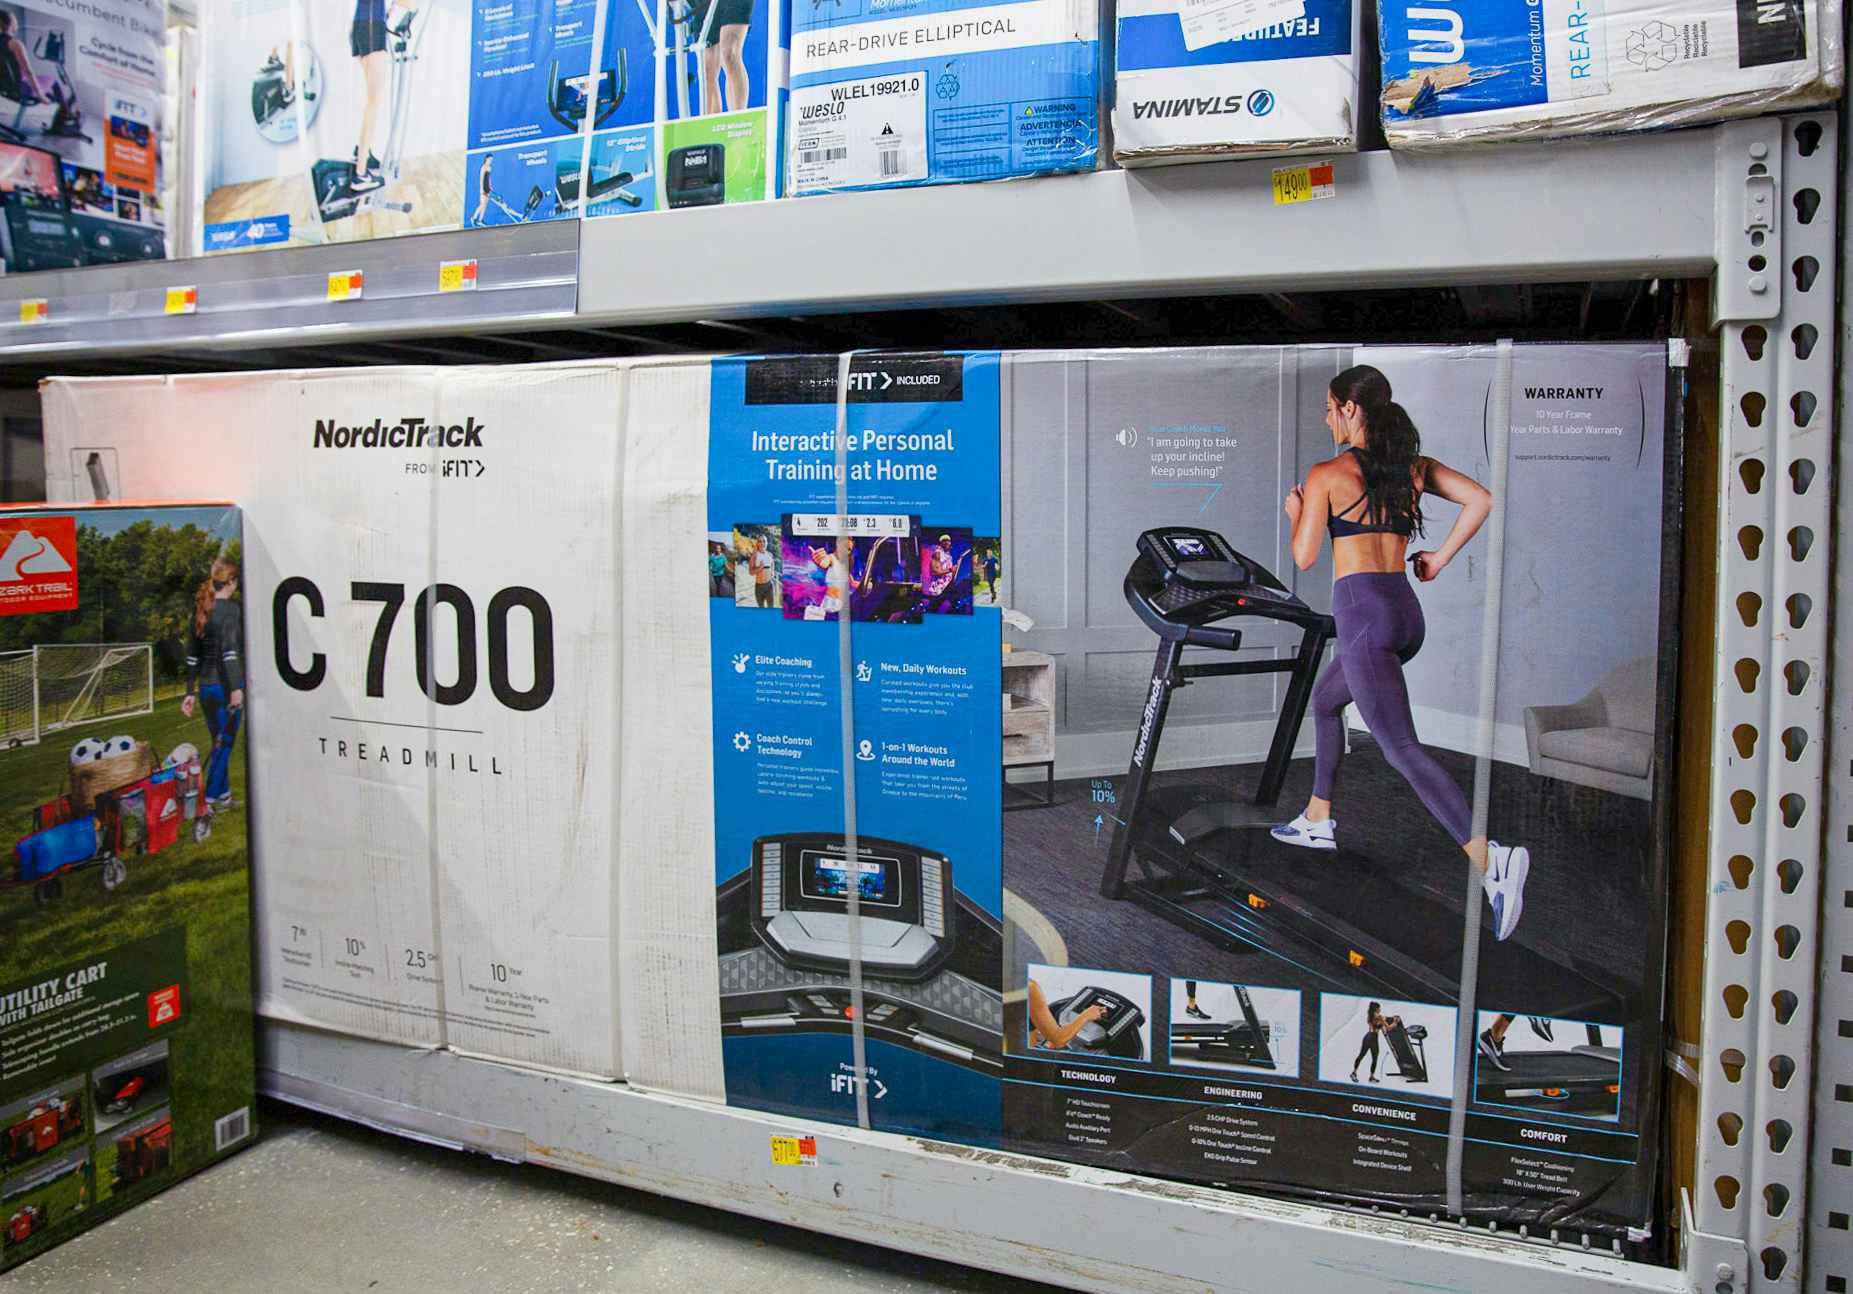 A NordicTrack c700 treadmill in its box on a Walmart shelf